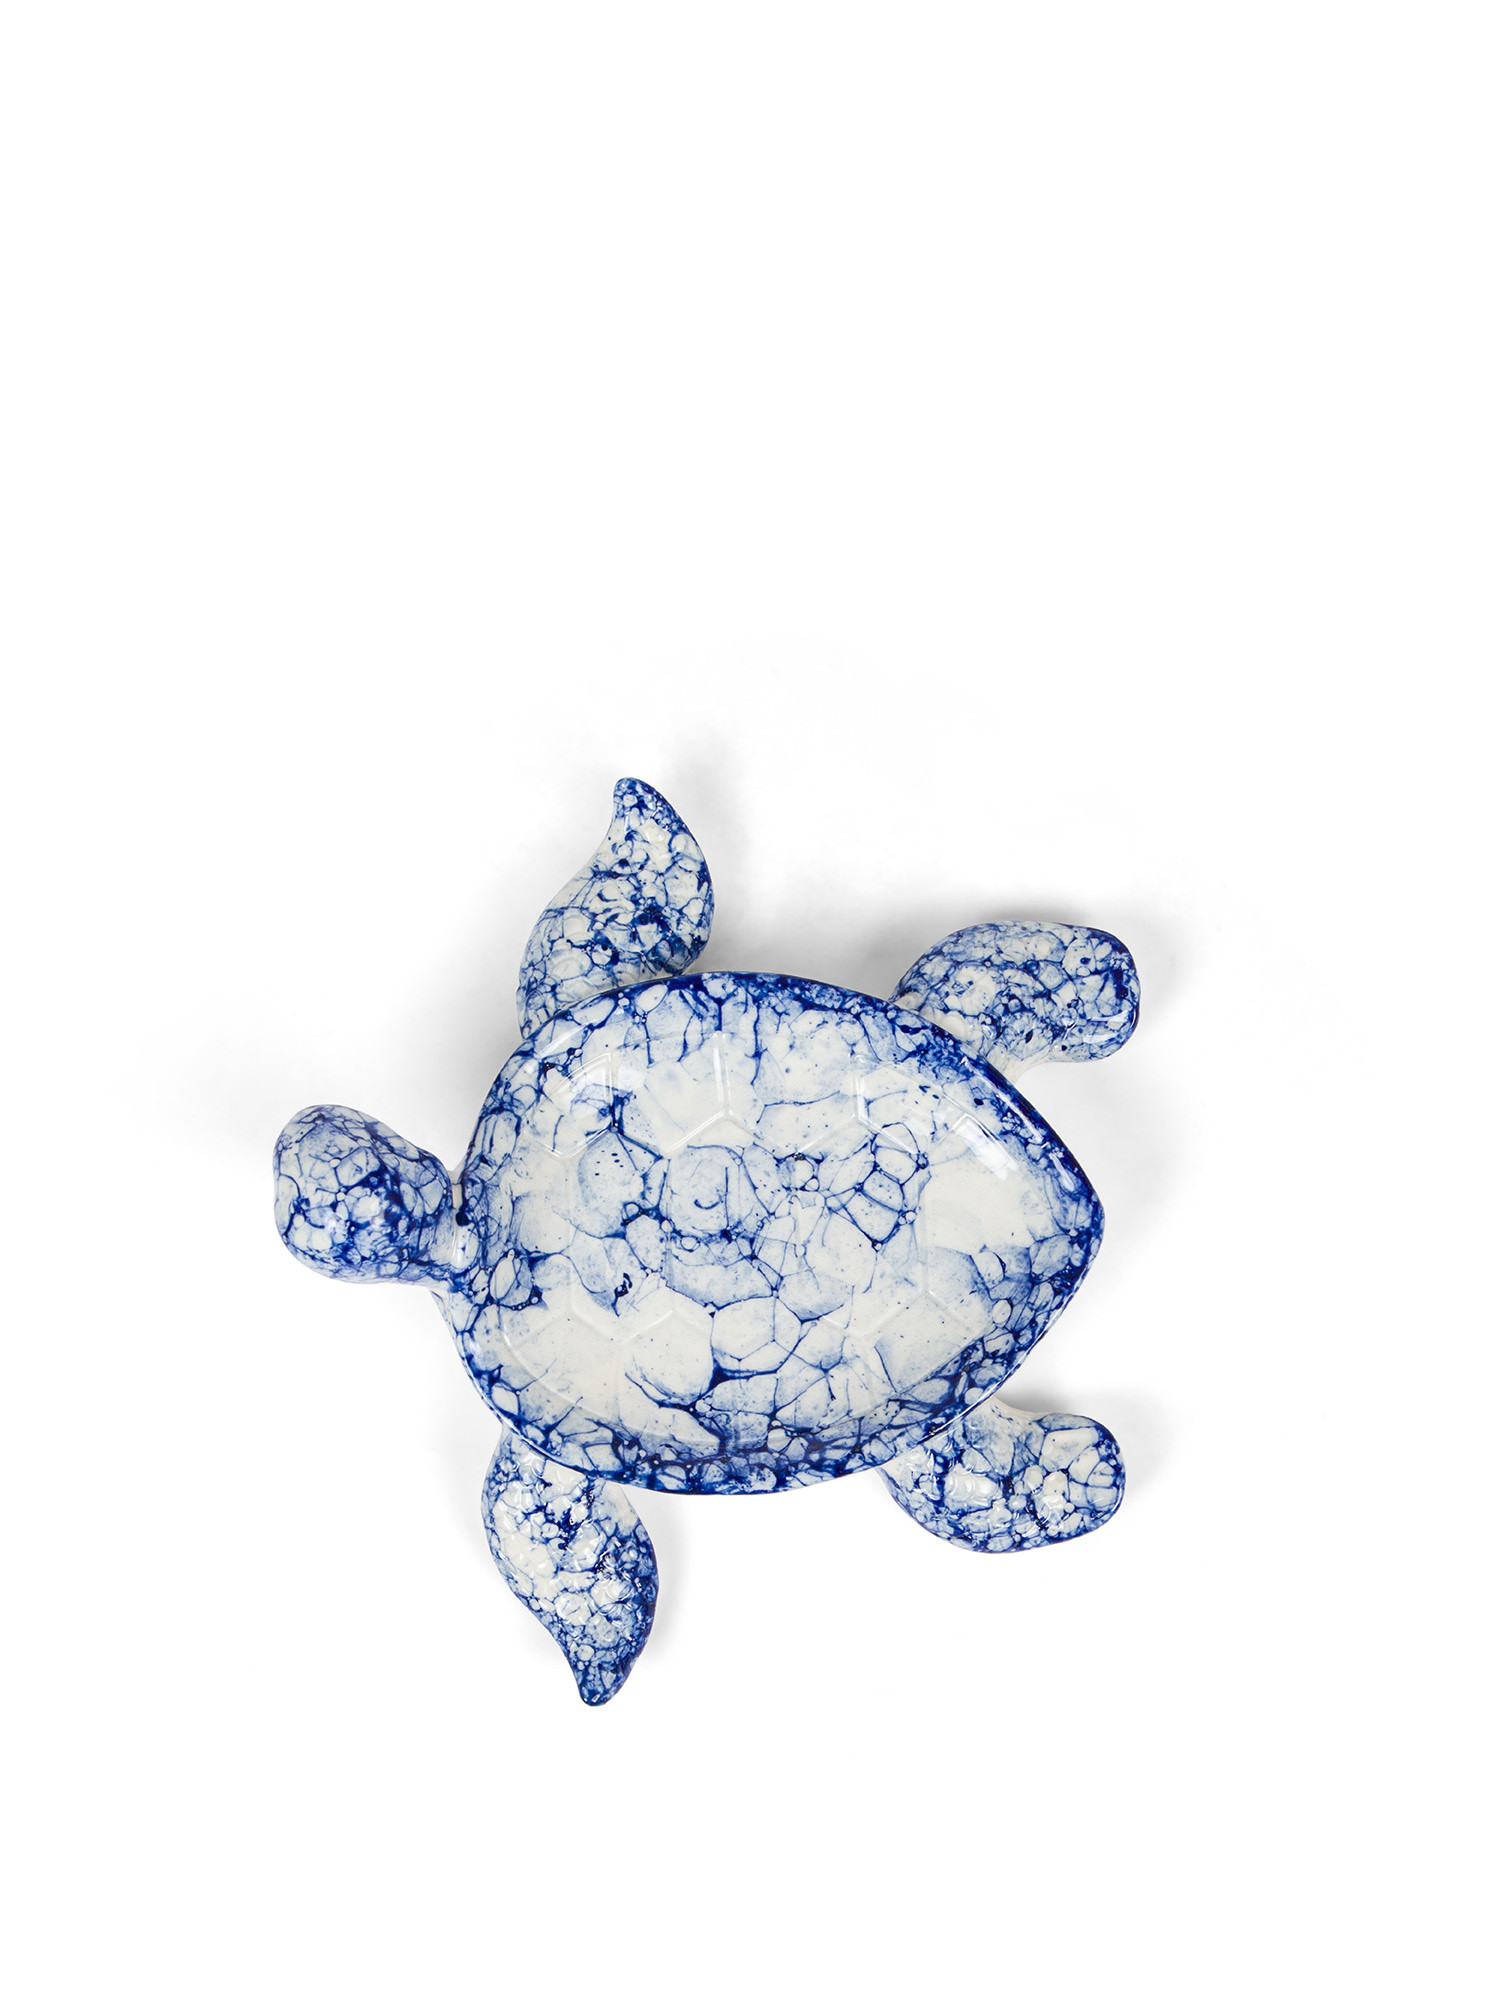 Svuotatasche in ceramica, Bianco/Blu, large image number 0